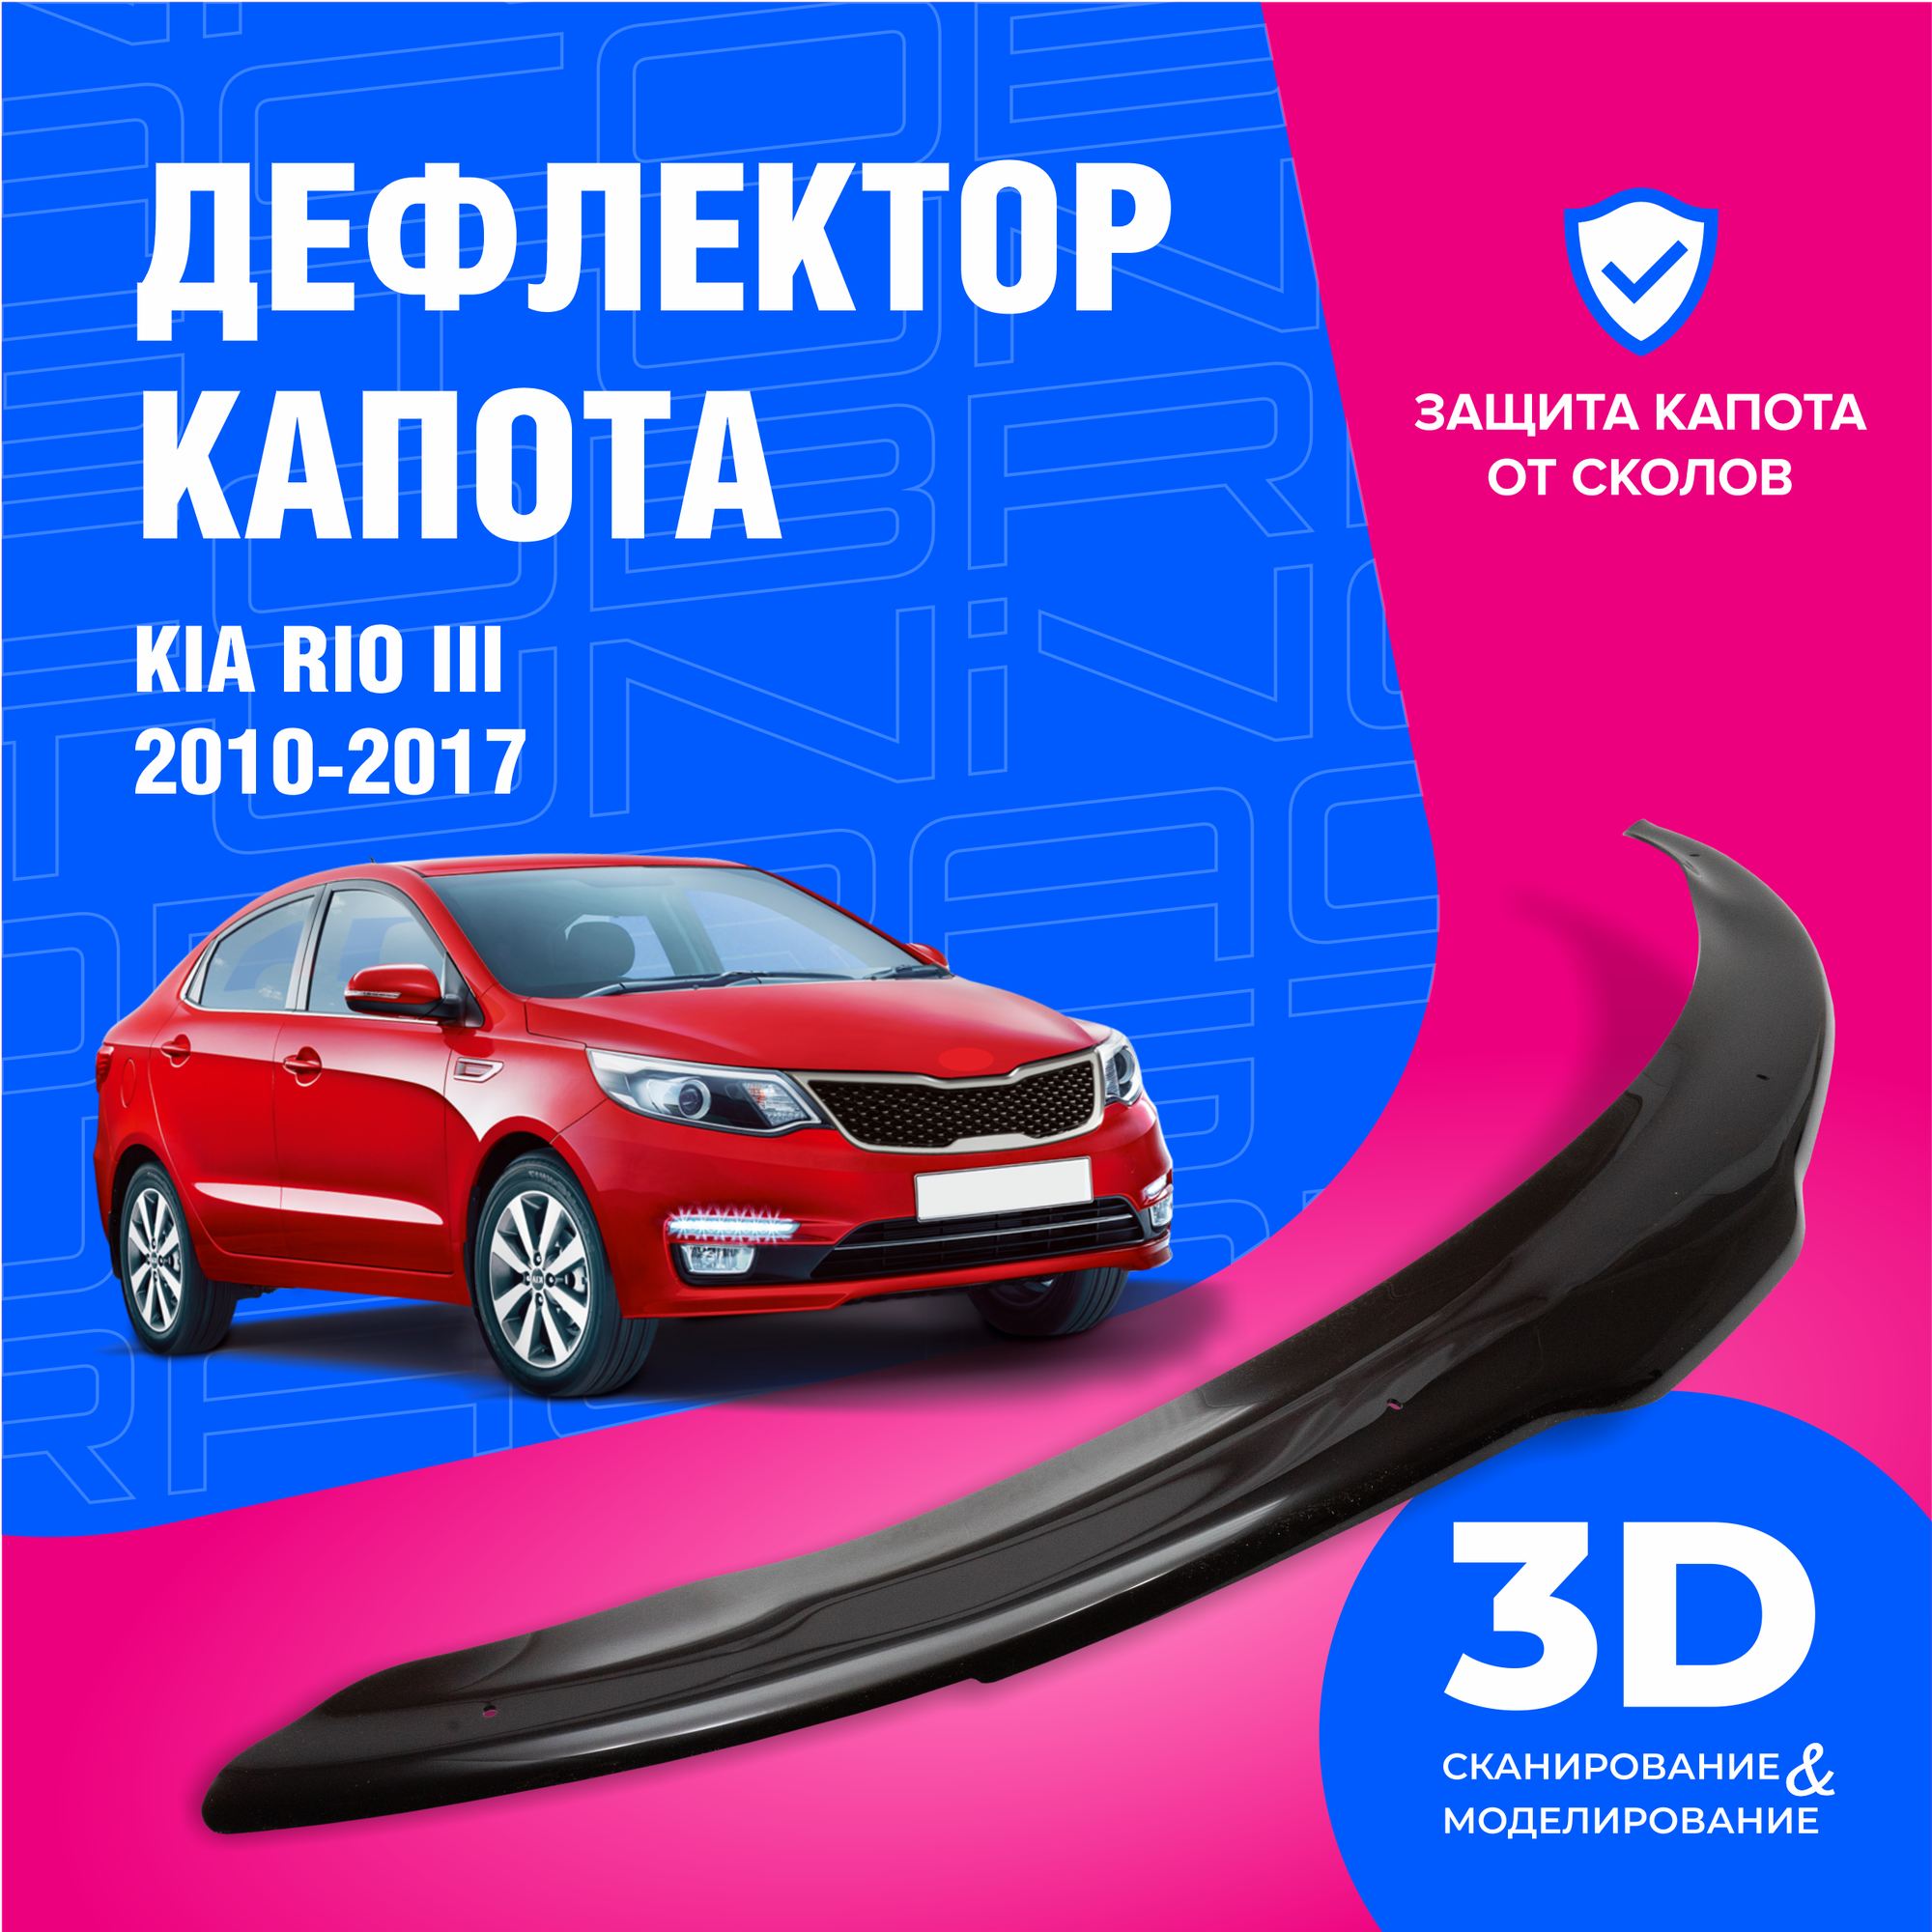 Дефлектор капота для автомобиля Kia Rio III седан хэтчбек (Киа Рио 3) 2010-2017 мухобойка защита от сколов Cobra Tuning